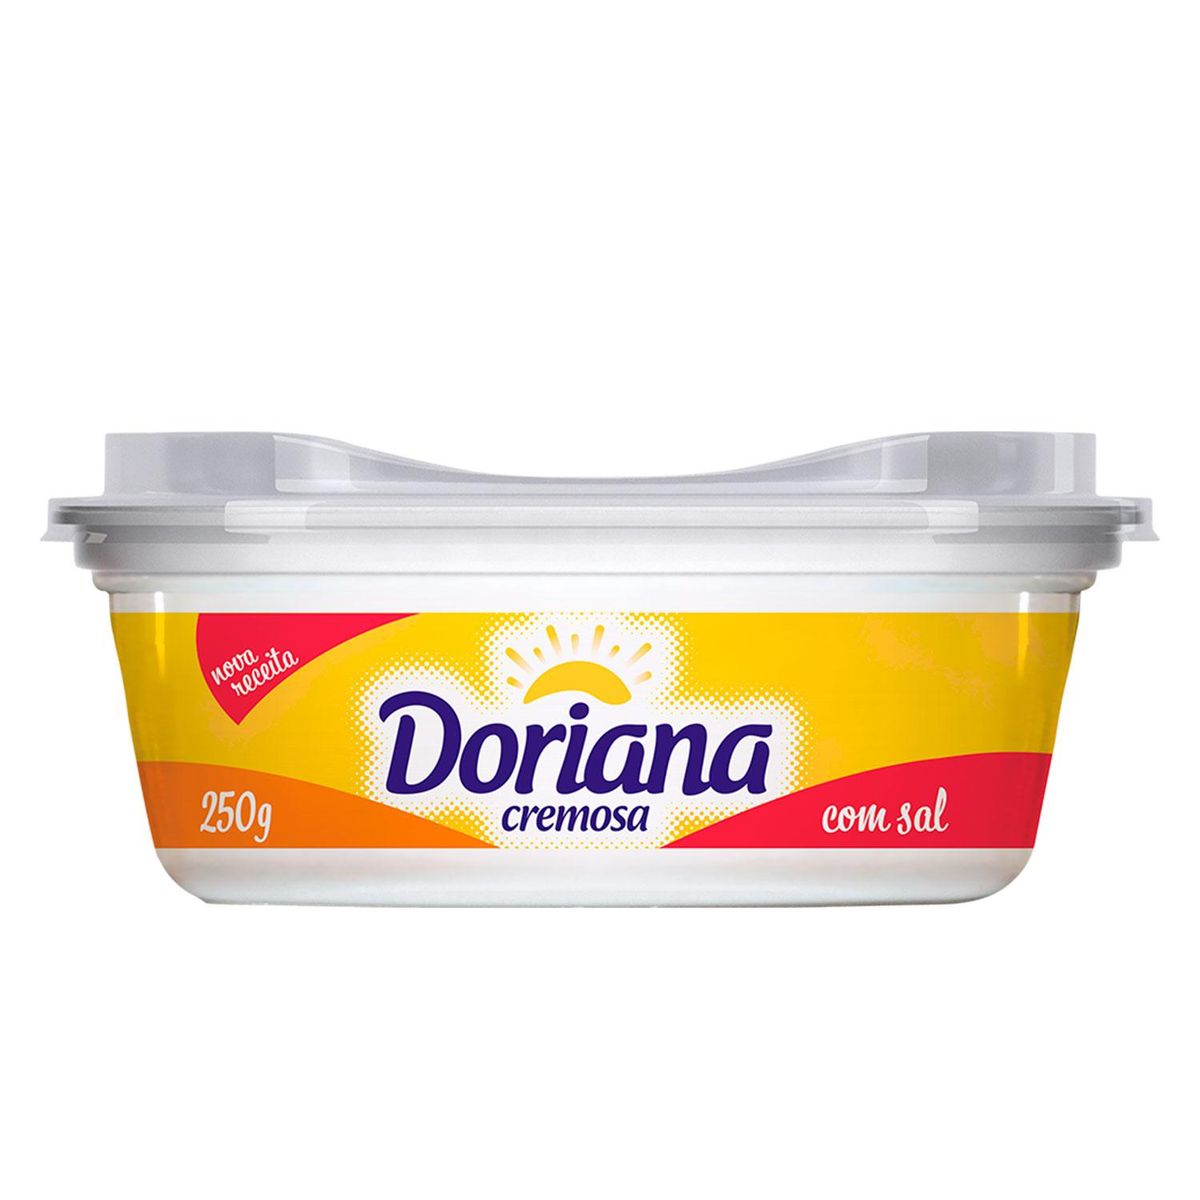 Margarina cremosa com sal Doriana 250g image number 0